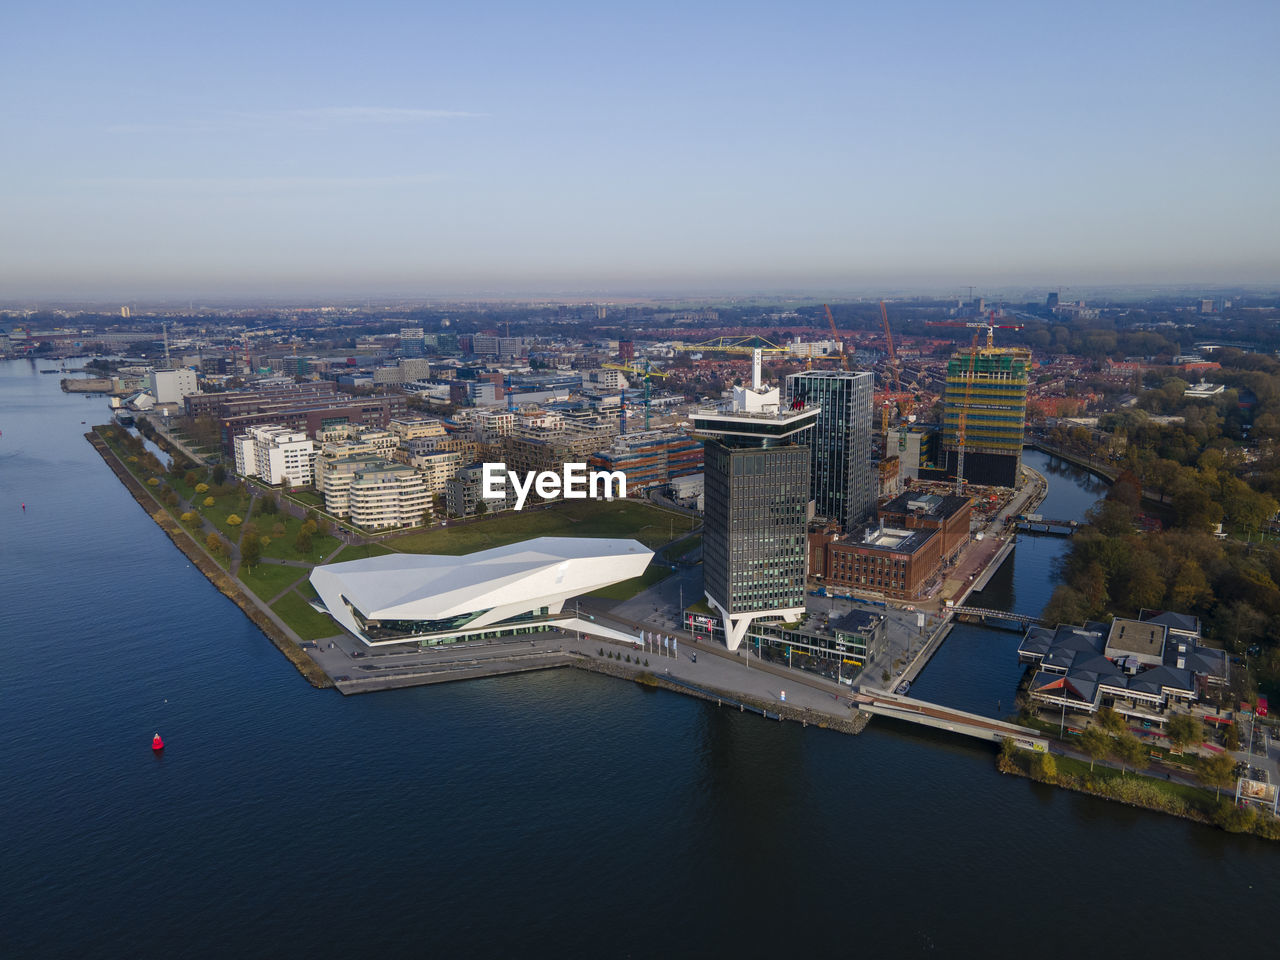 Adam tower  and eye film museum in amsterdam, netherlands